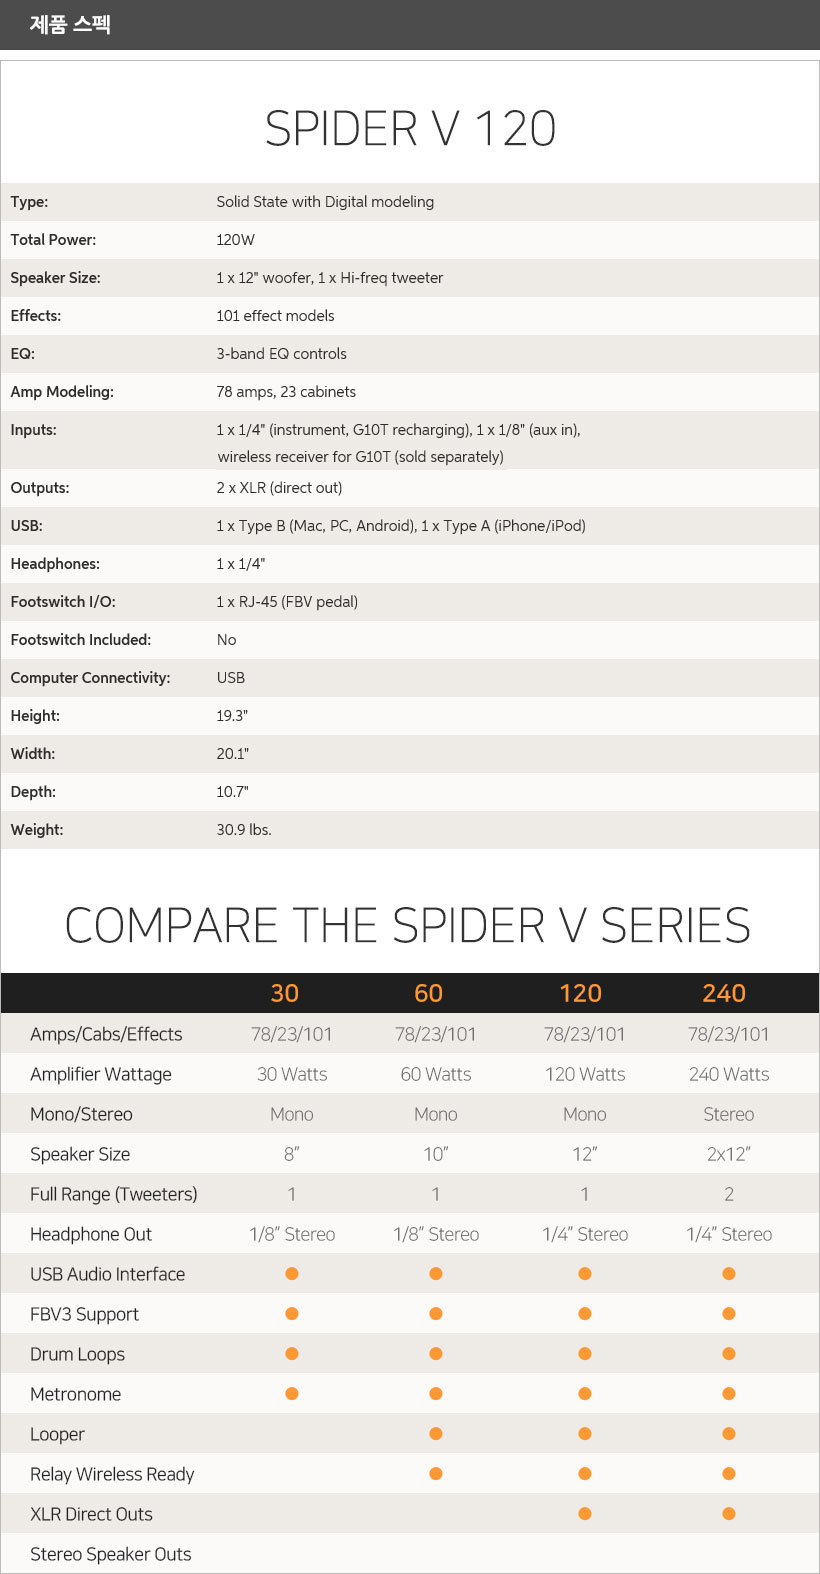 SPIDER V 120 제품 스펙